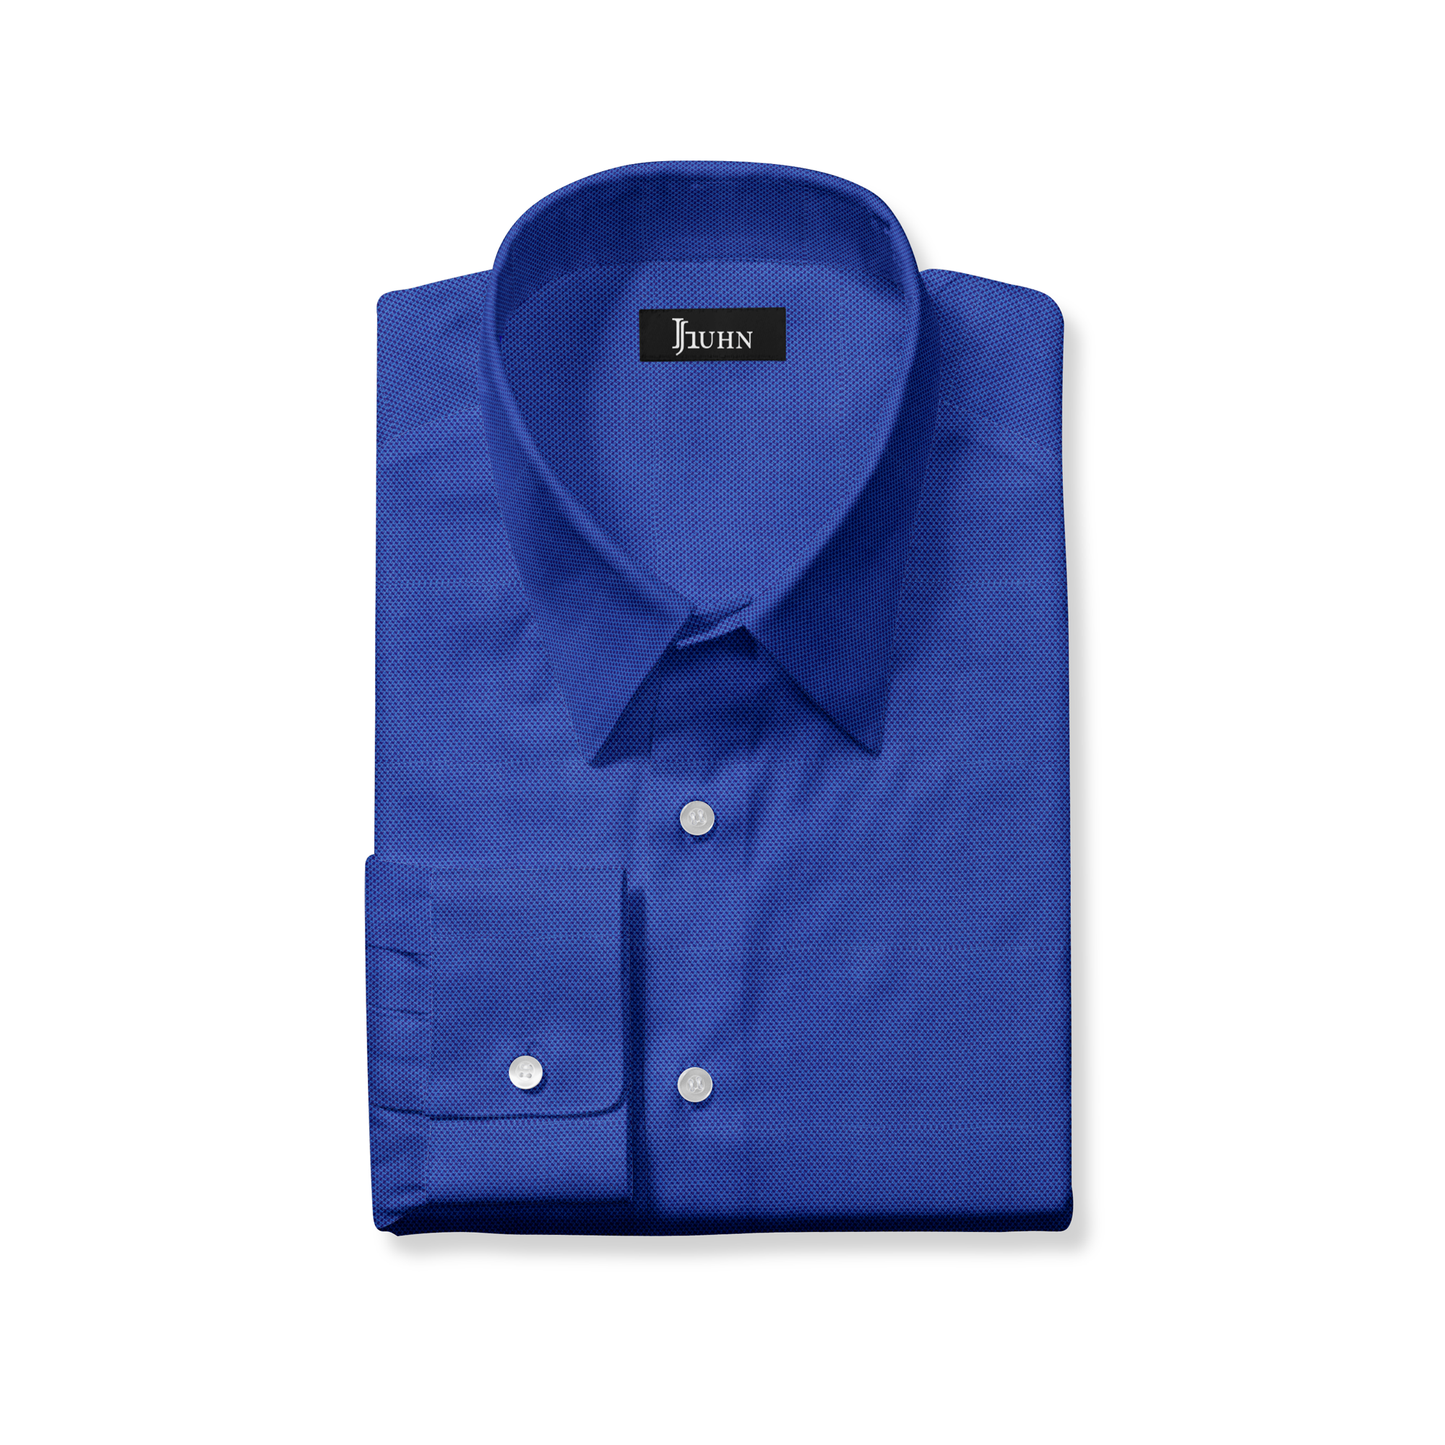 Board Room Men's Shirt in Elan Oxford Blue